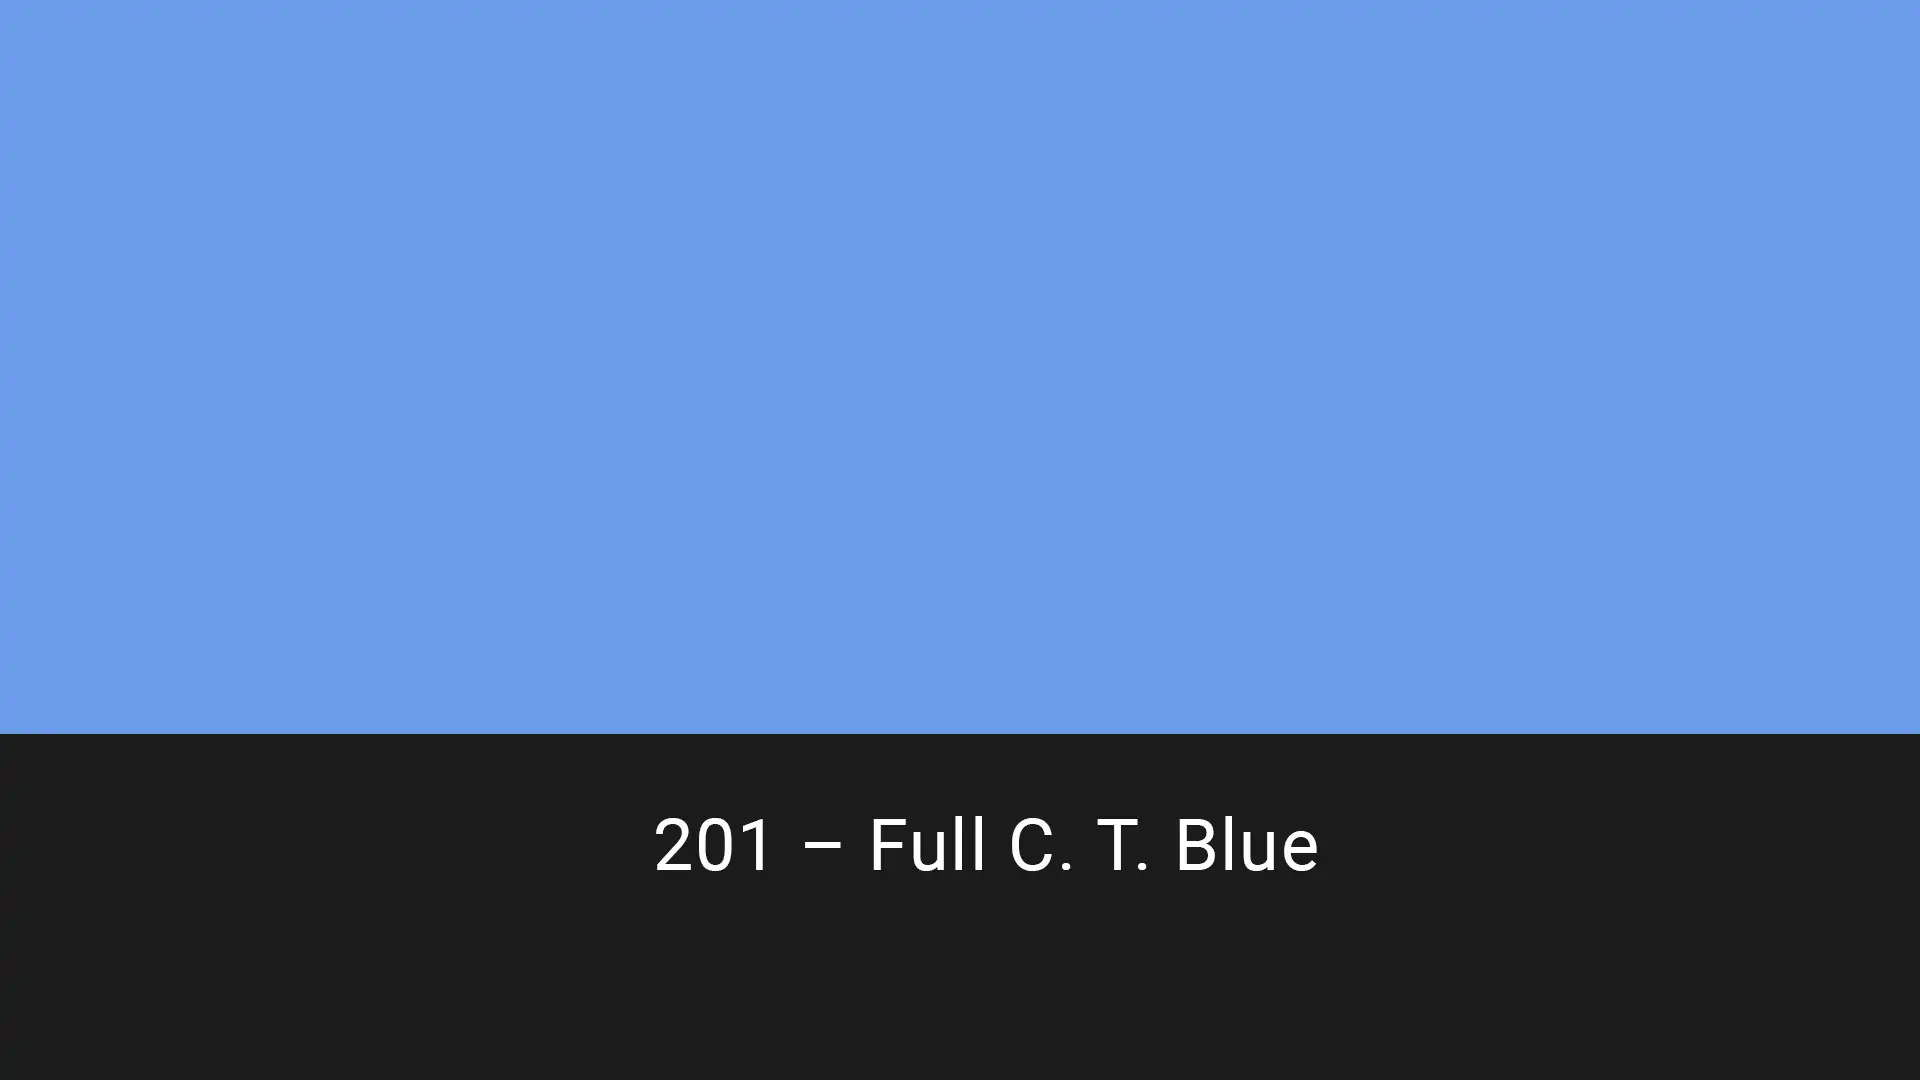 Cotech filters 201 Full C.T. Blue